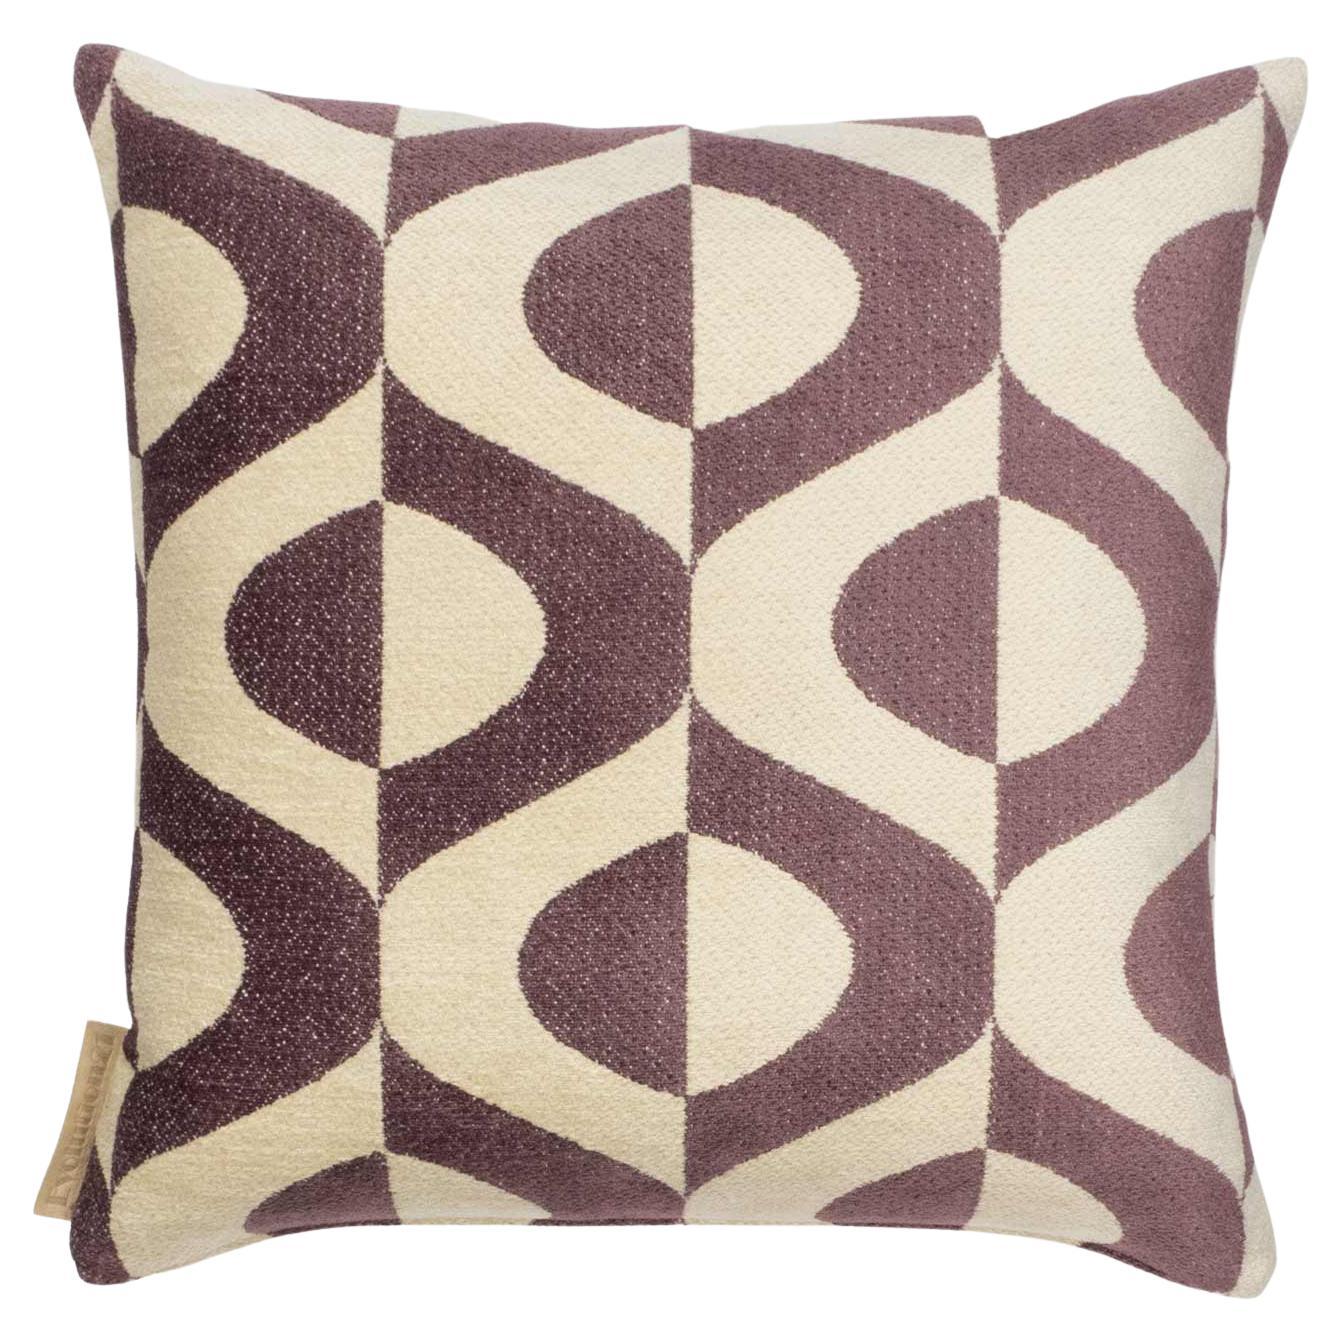 Art Deco Style Ajaccio Purple Beige Pattern Linen Pillow by Evolution21  For Sale